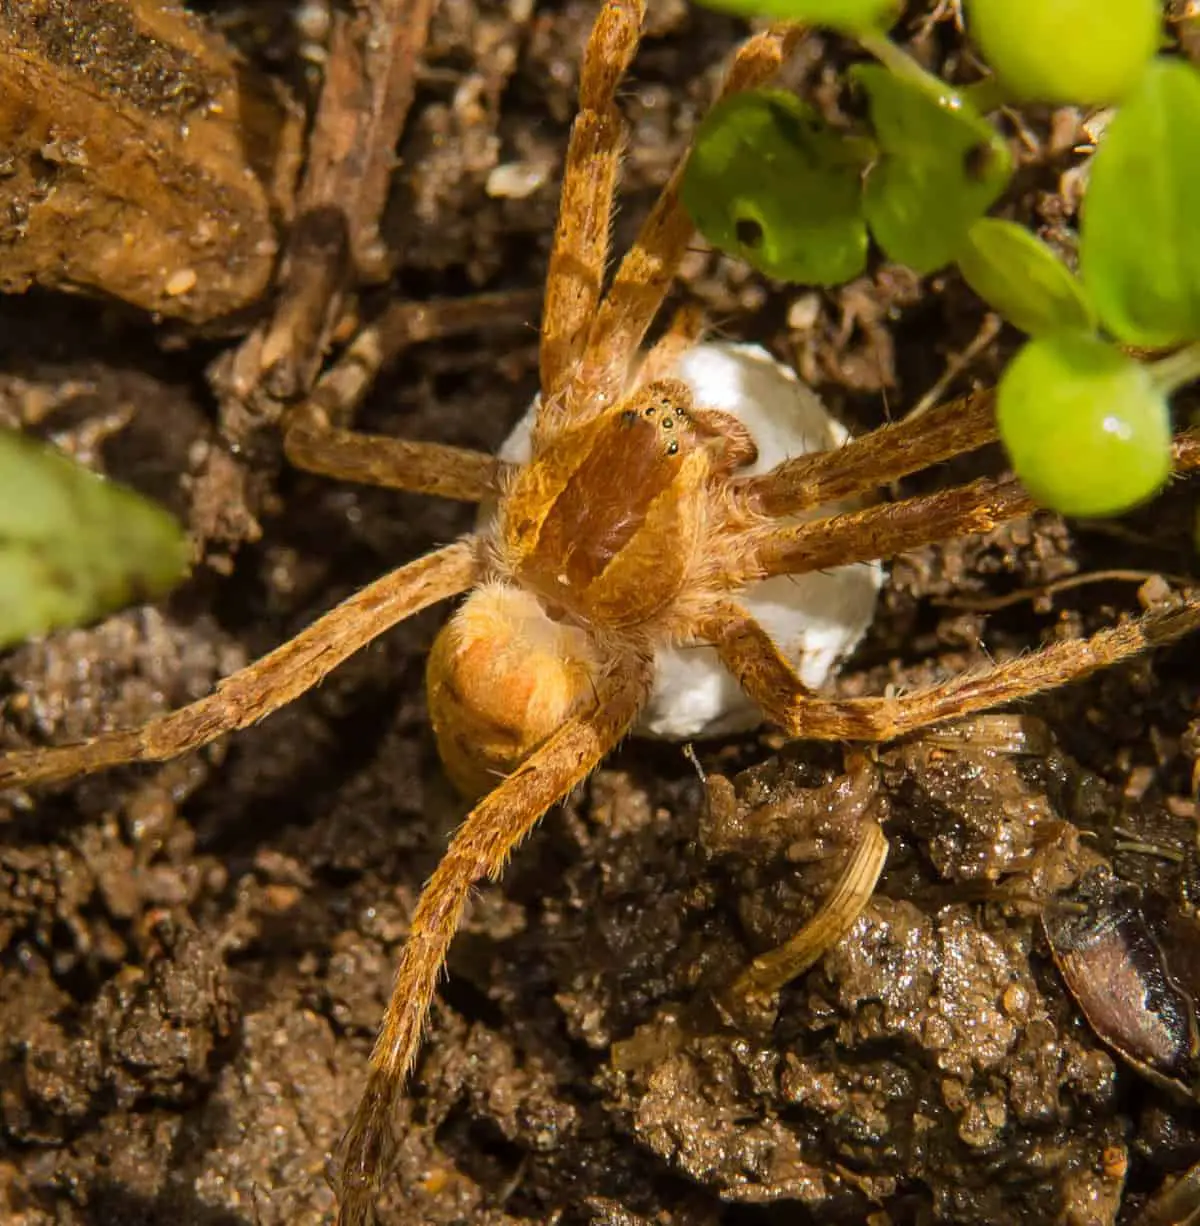 Female Nursery Spider with Egg Sac